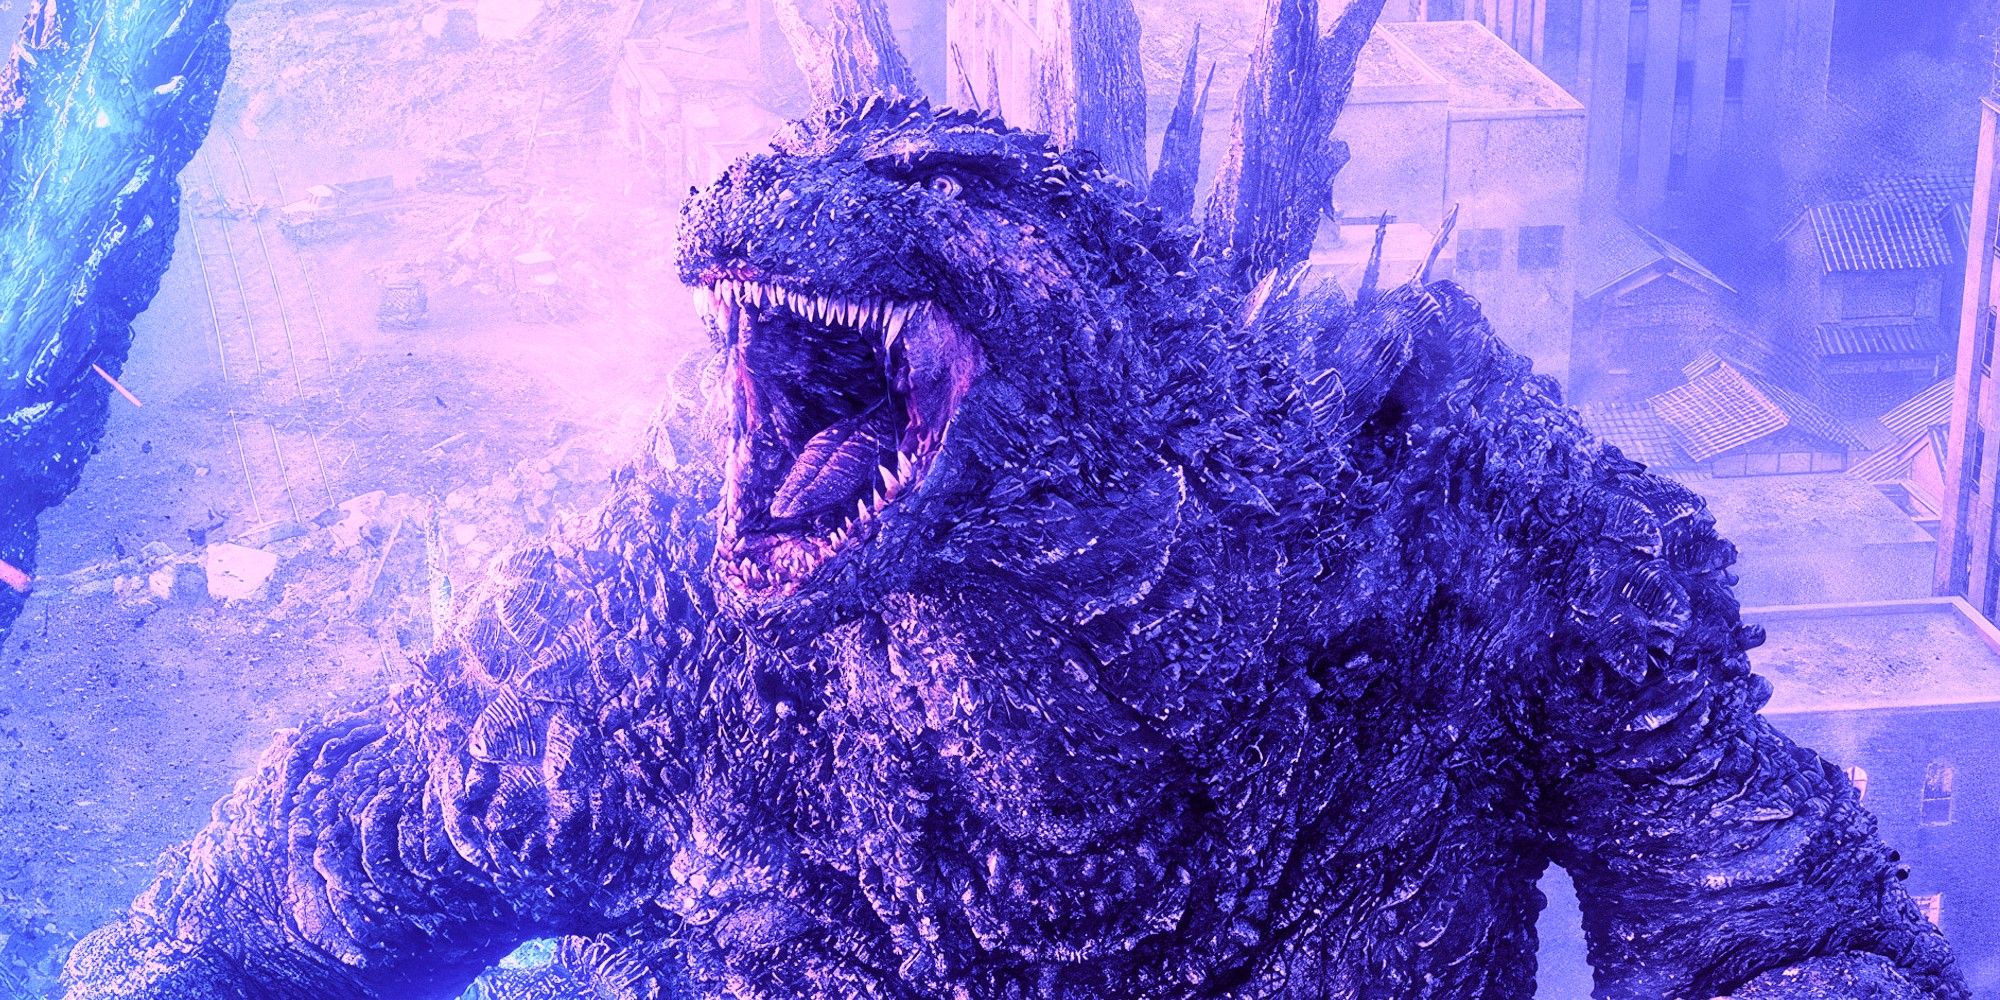 Does Godzilla Minus One Have A Post-Credits Scene?